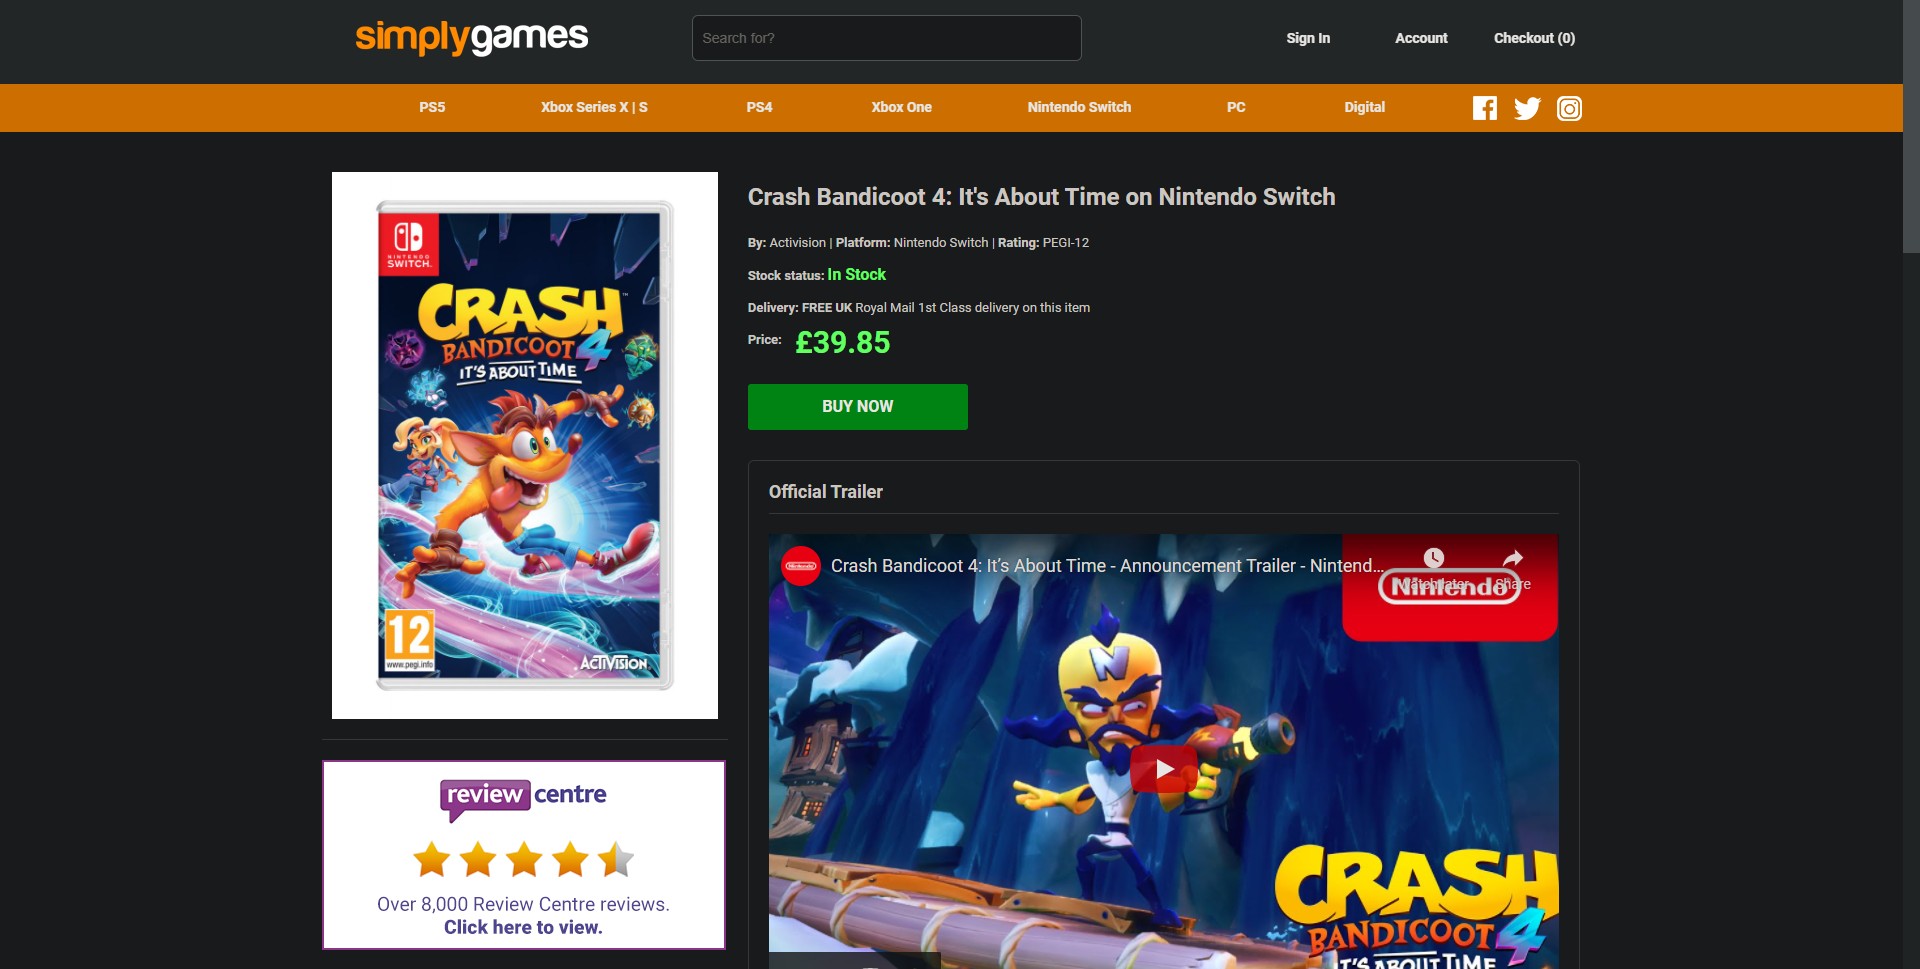 What if Crash was in Super Smash Bros? - British Bandicoot